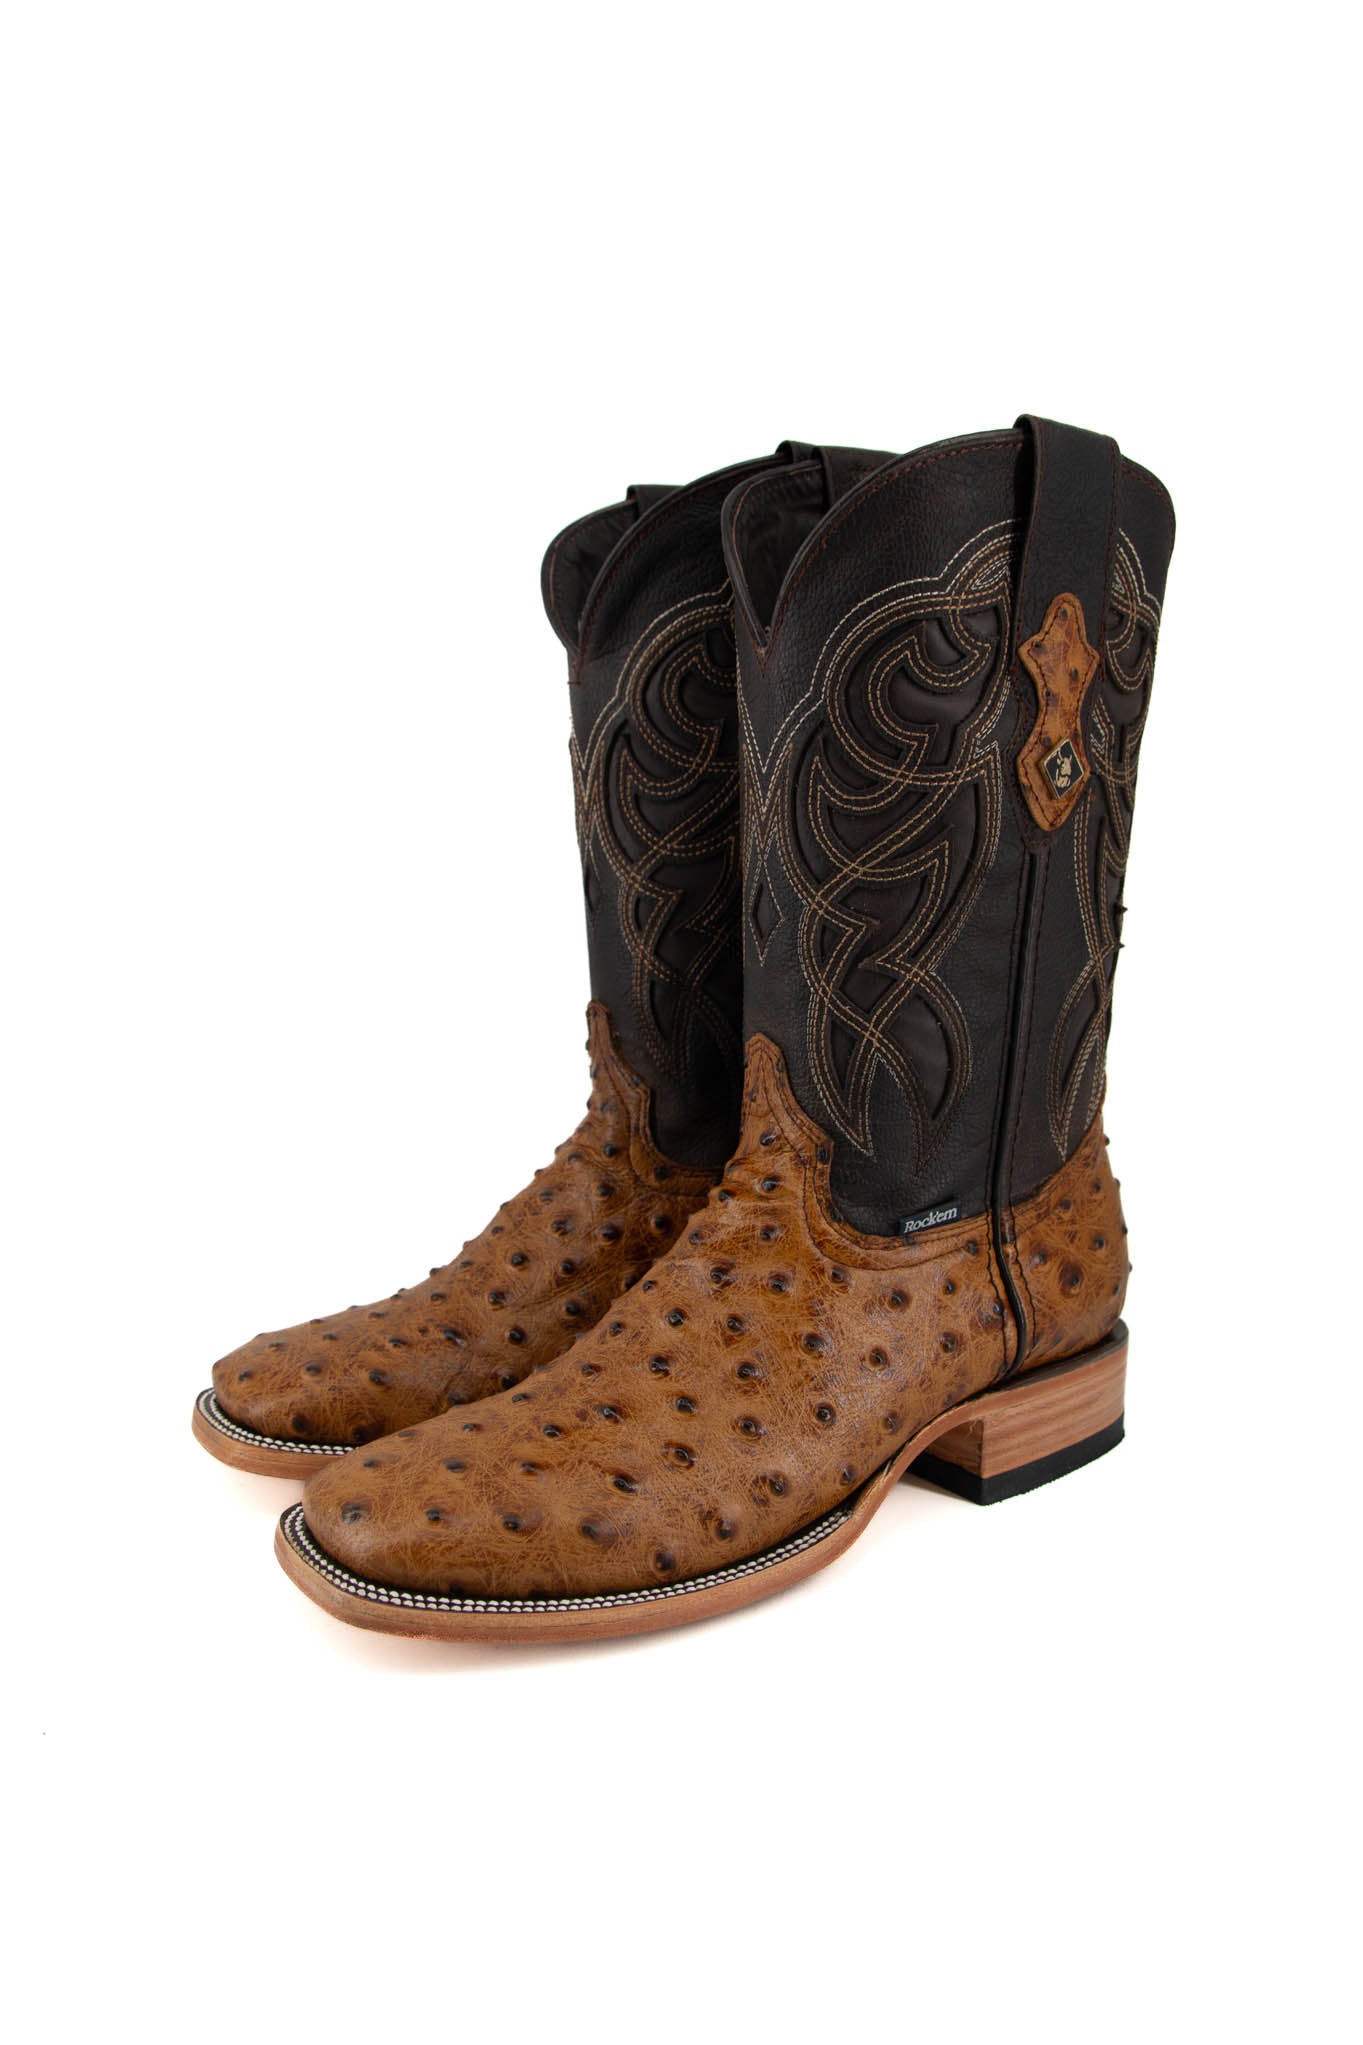 Imit. Avestruz Ranch Square Toe Cowboy Boot